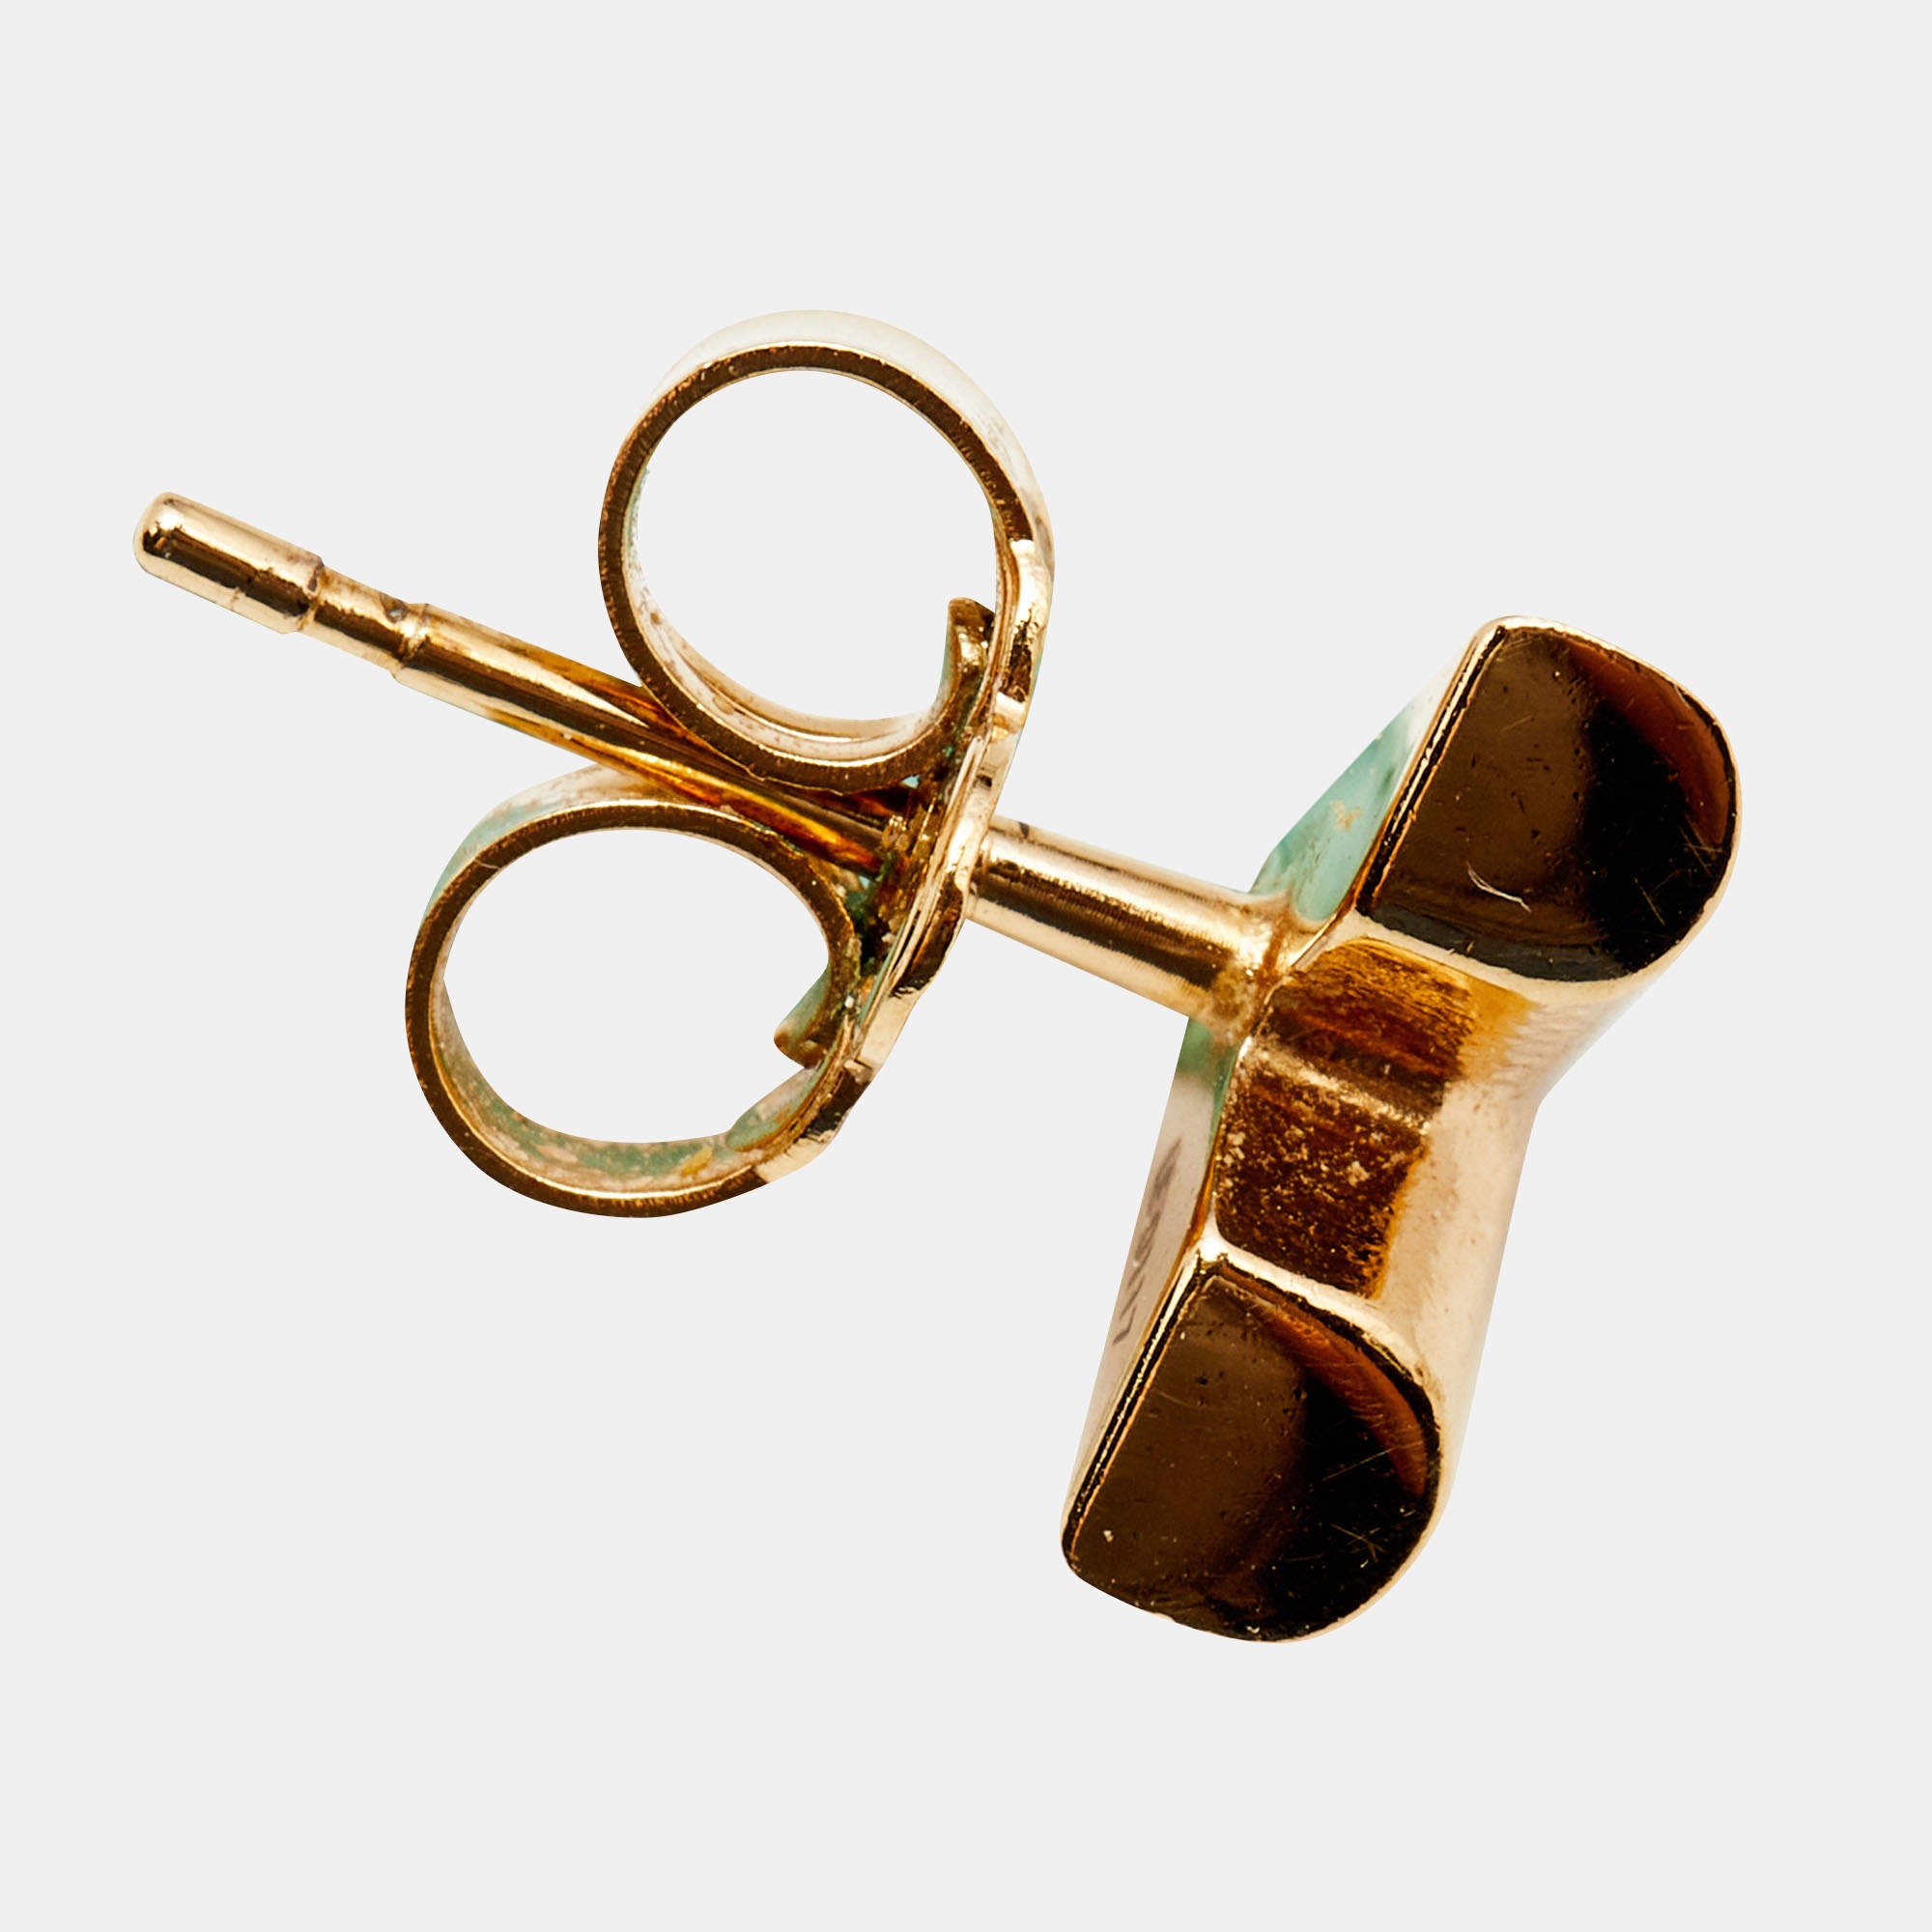 Louis Vuitton Gold Finish Black Essential V Earrings – The Closet